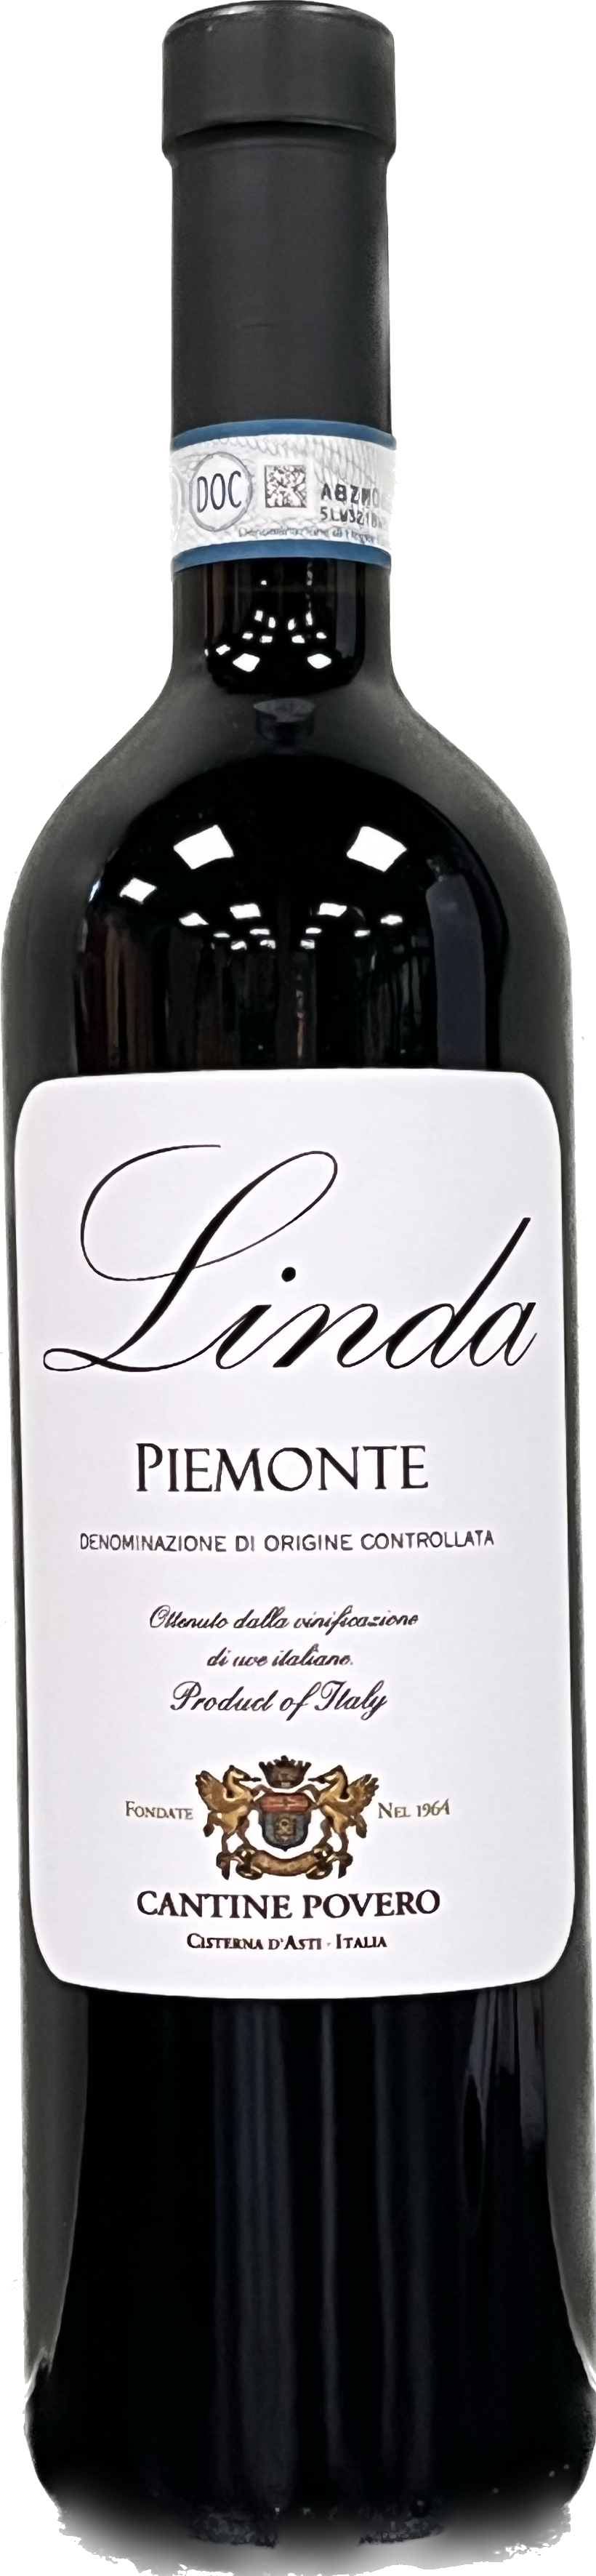 Langhe Rosso Piemonte "Linda"